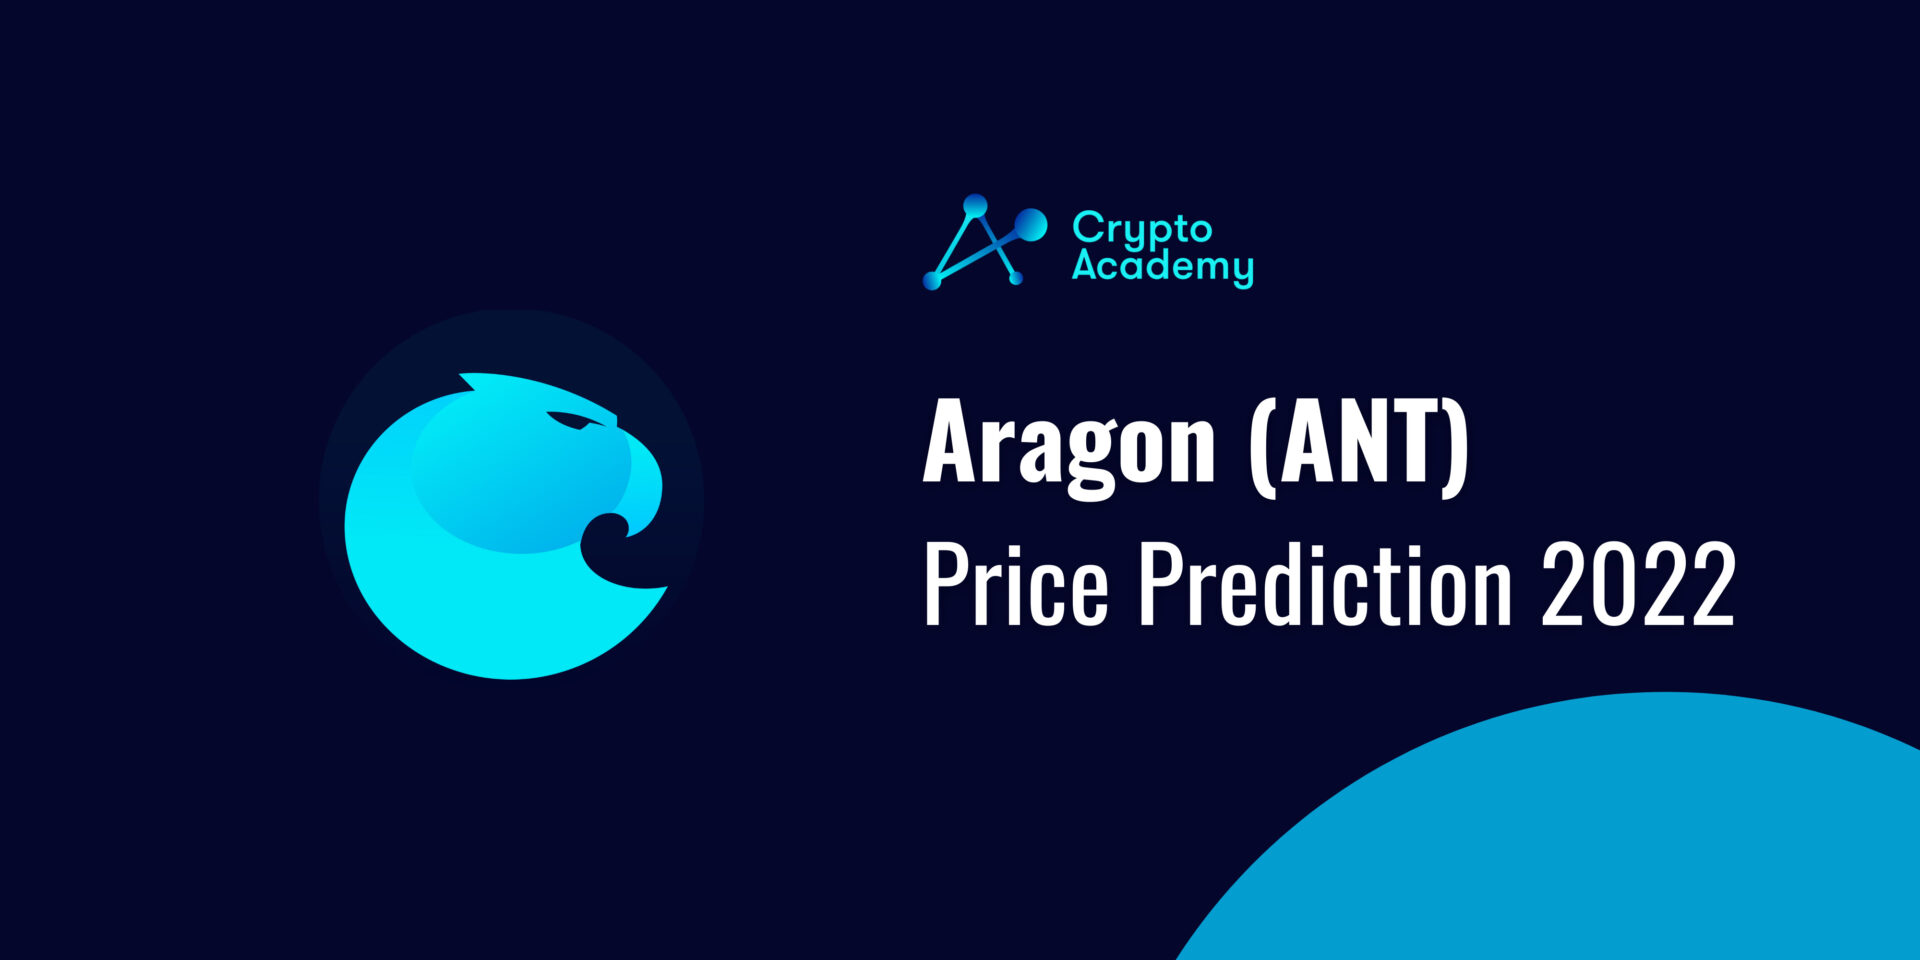 Aragon Token Price Prediction 2022 and Beyond - Can ANT Eventually Reach $100?